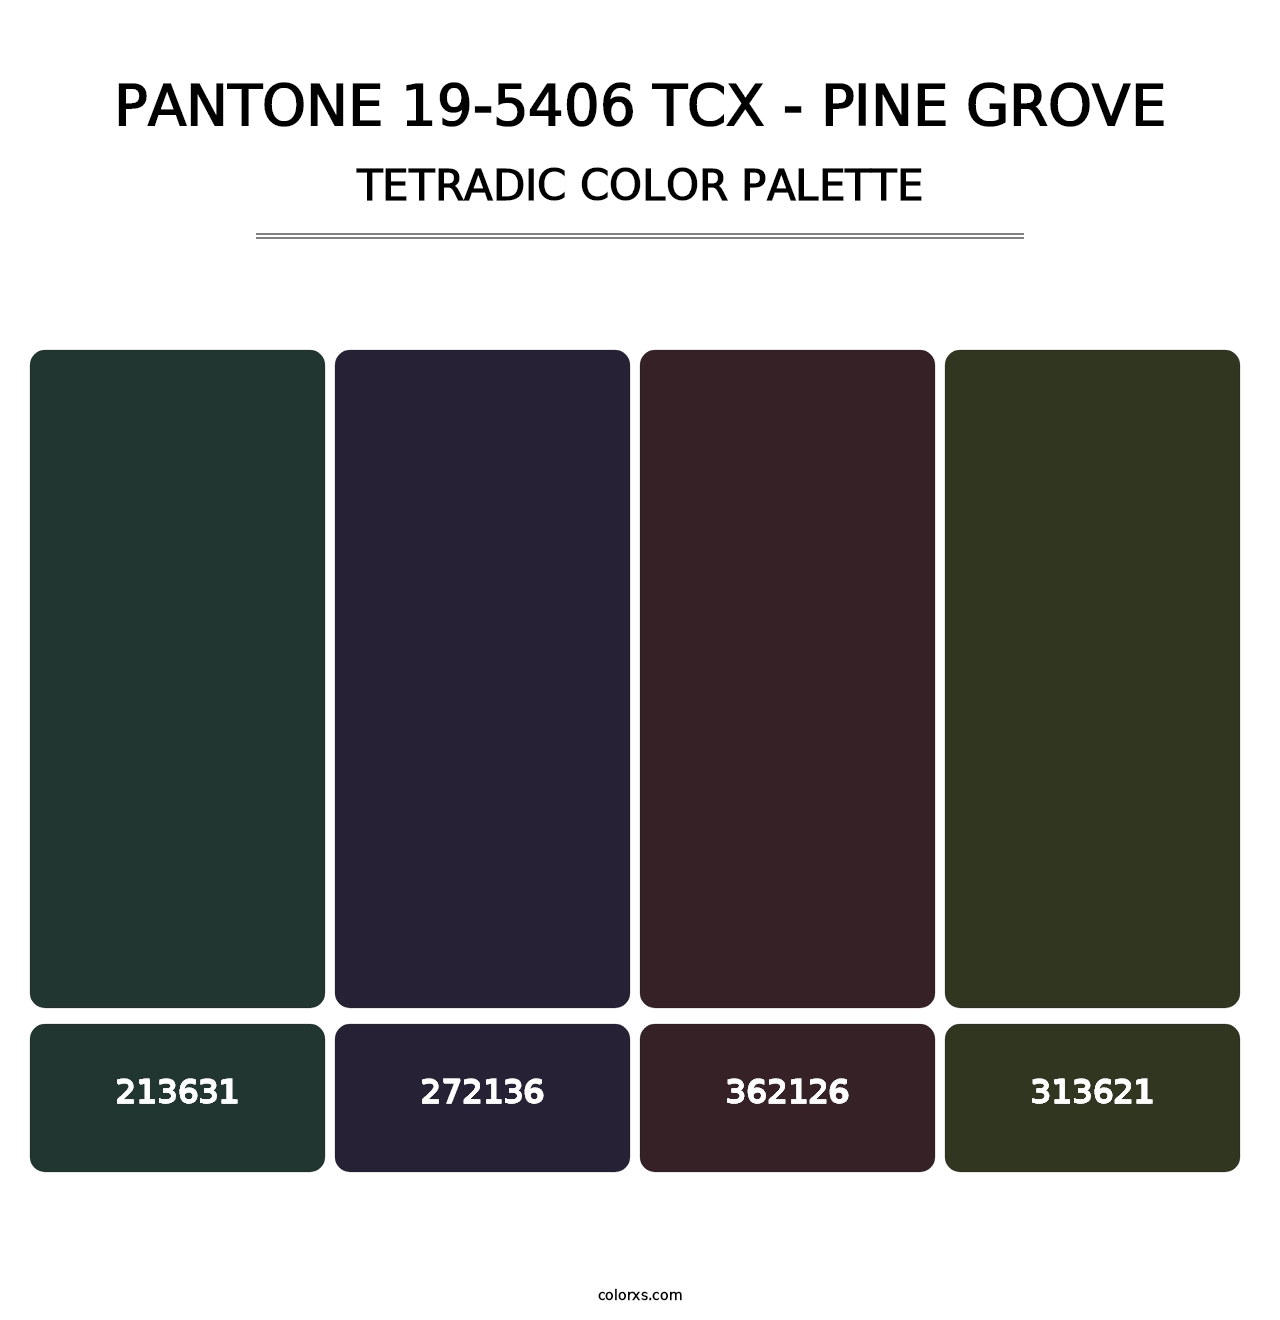 PANTONE 19-5406 TCX - Pine Grove - Tetradic Color Palette